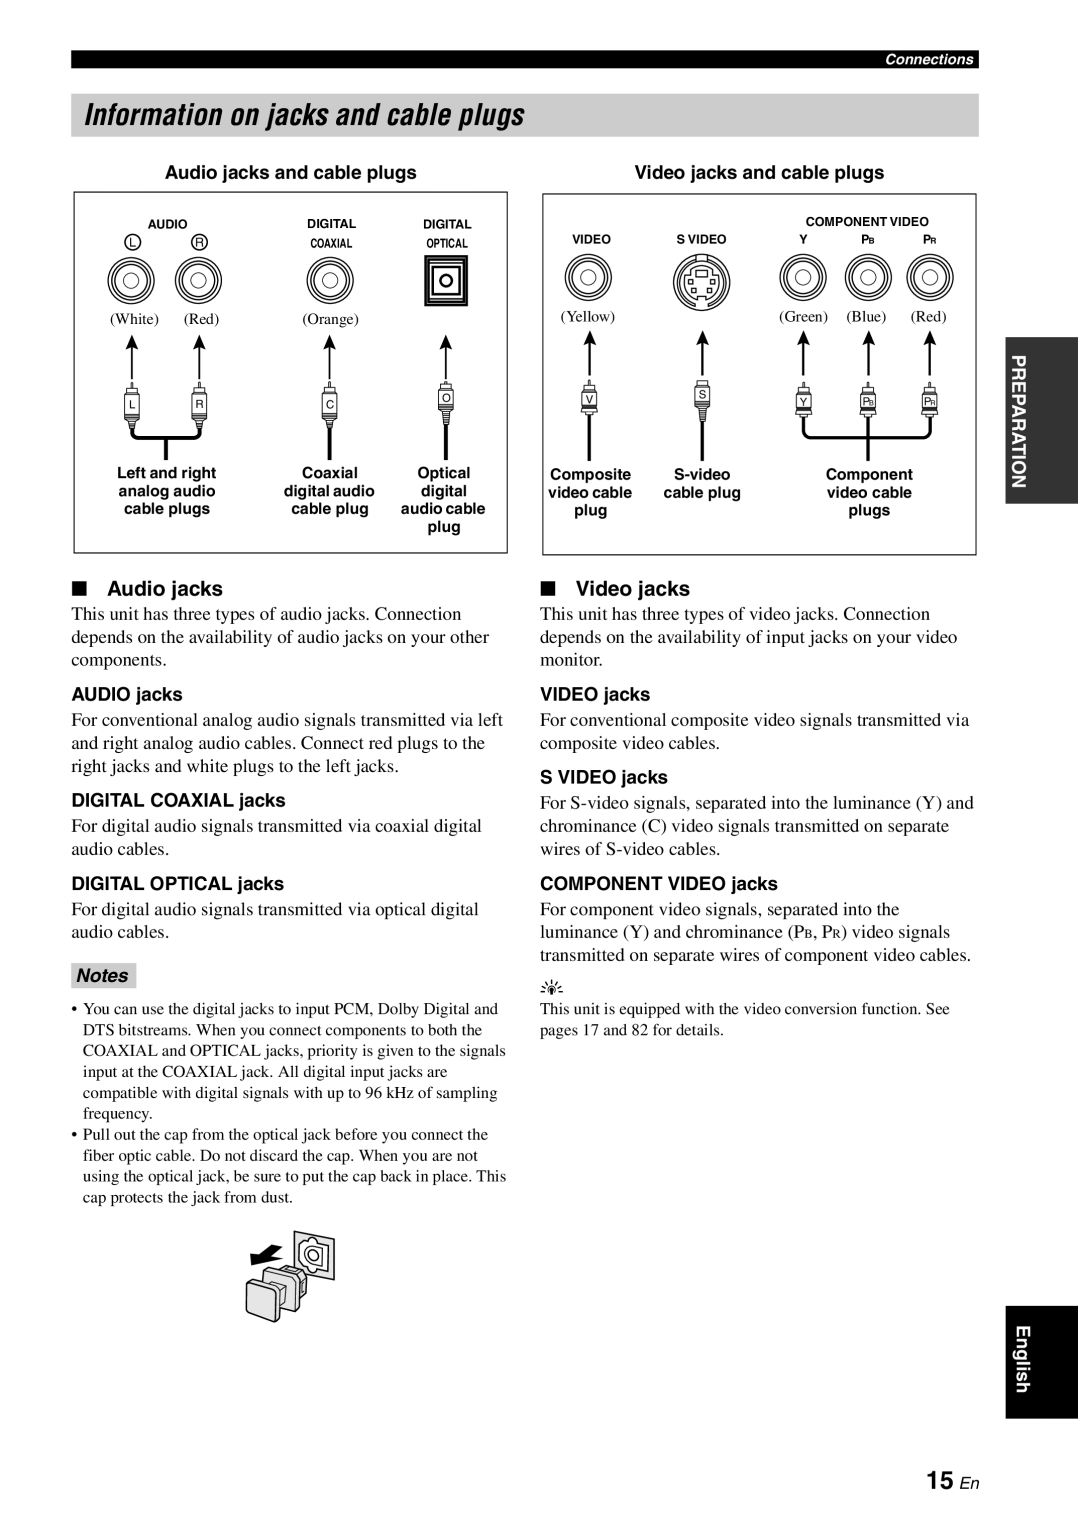 Yamaha HTR-6080 owner manual Information on jacks and cable plugs, 15 En, Audio jacks, Video jacks, Notes 